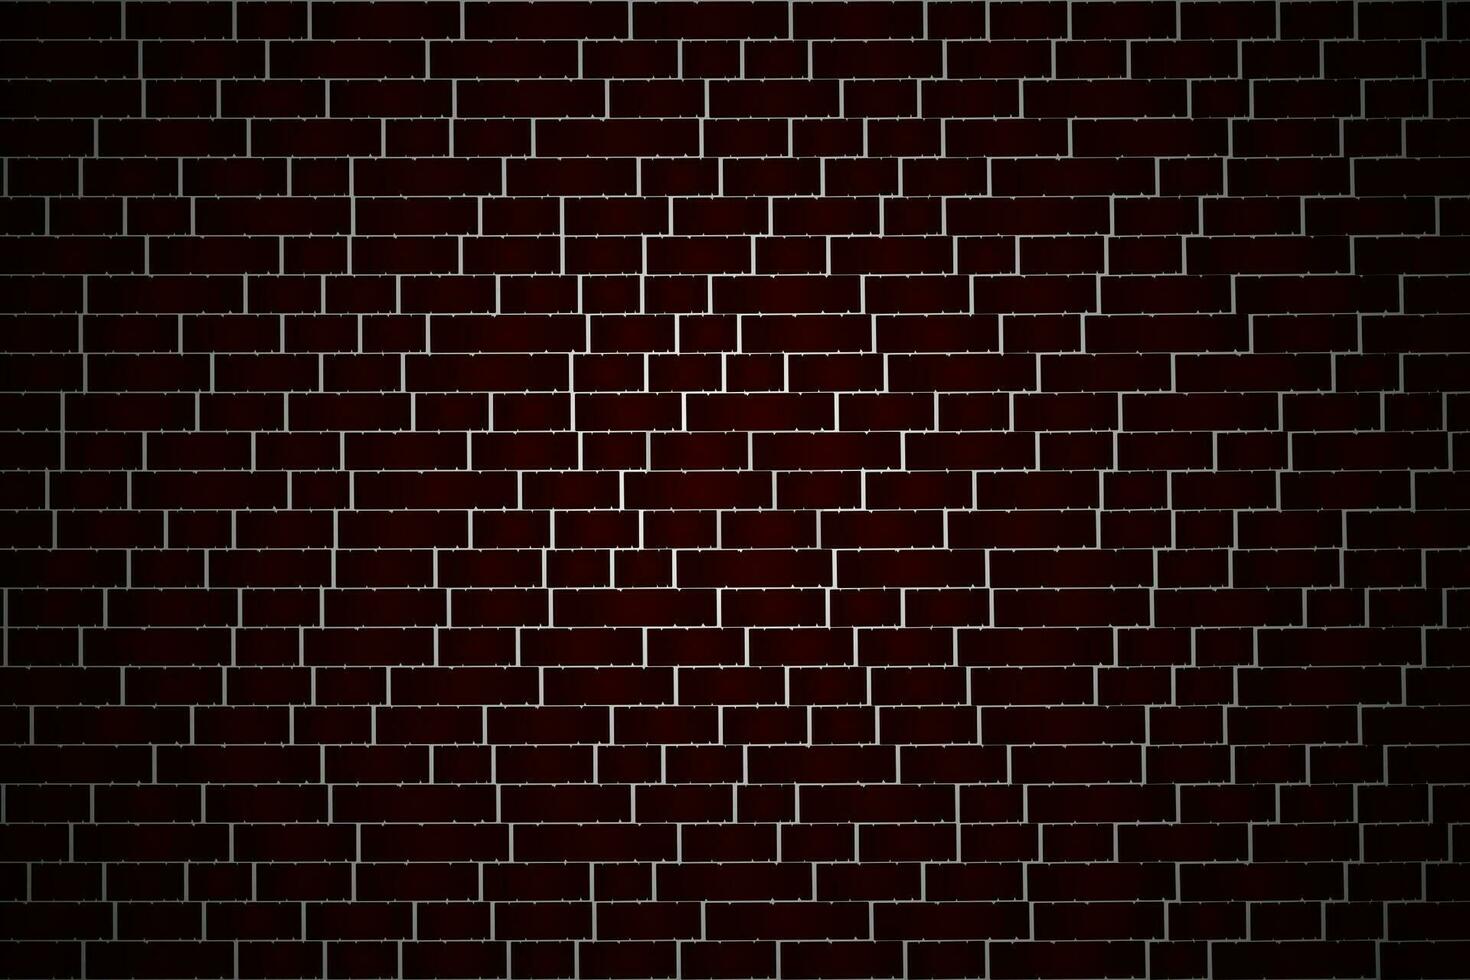 Brick wall background, vector illustration